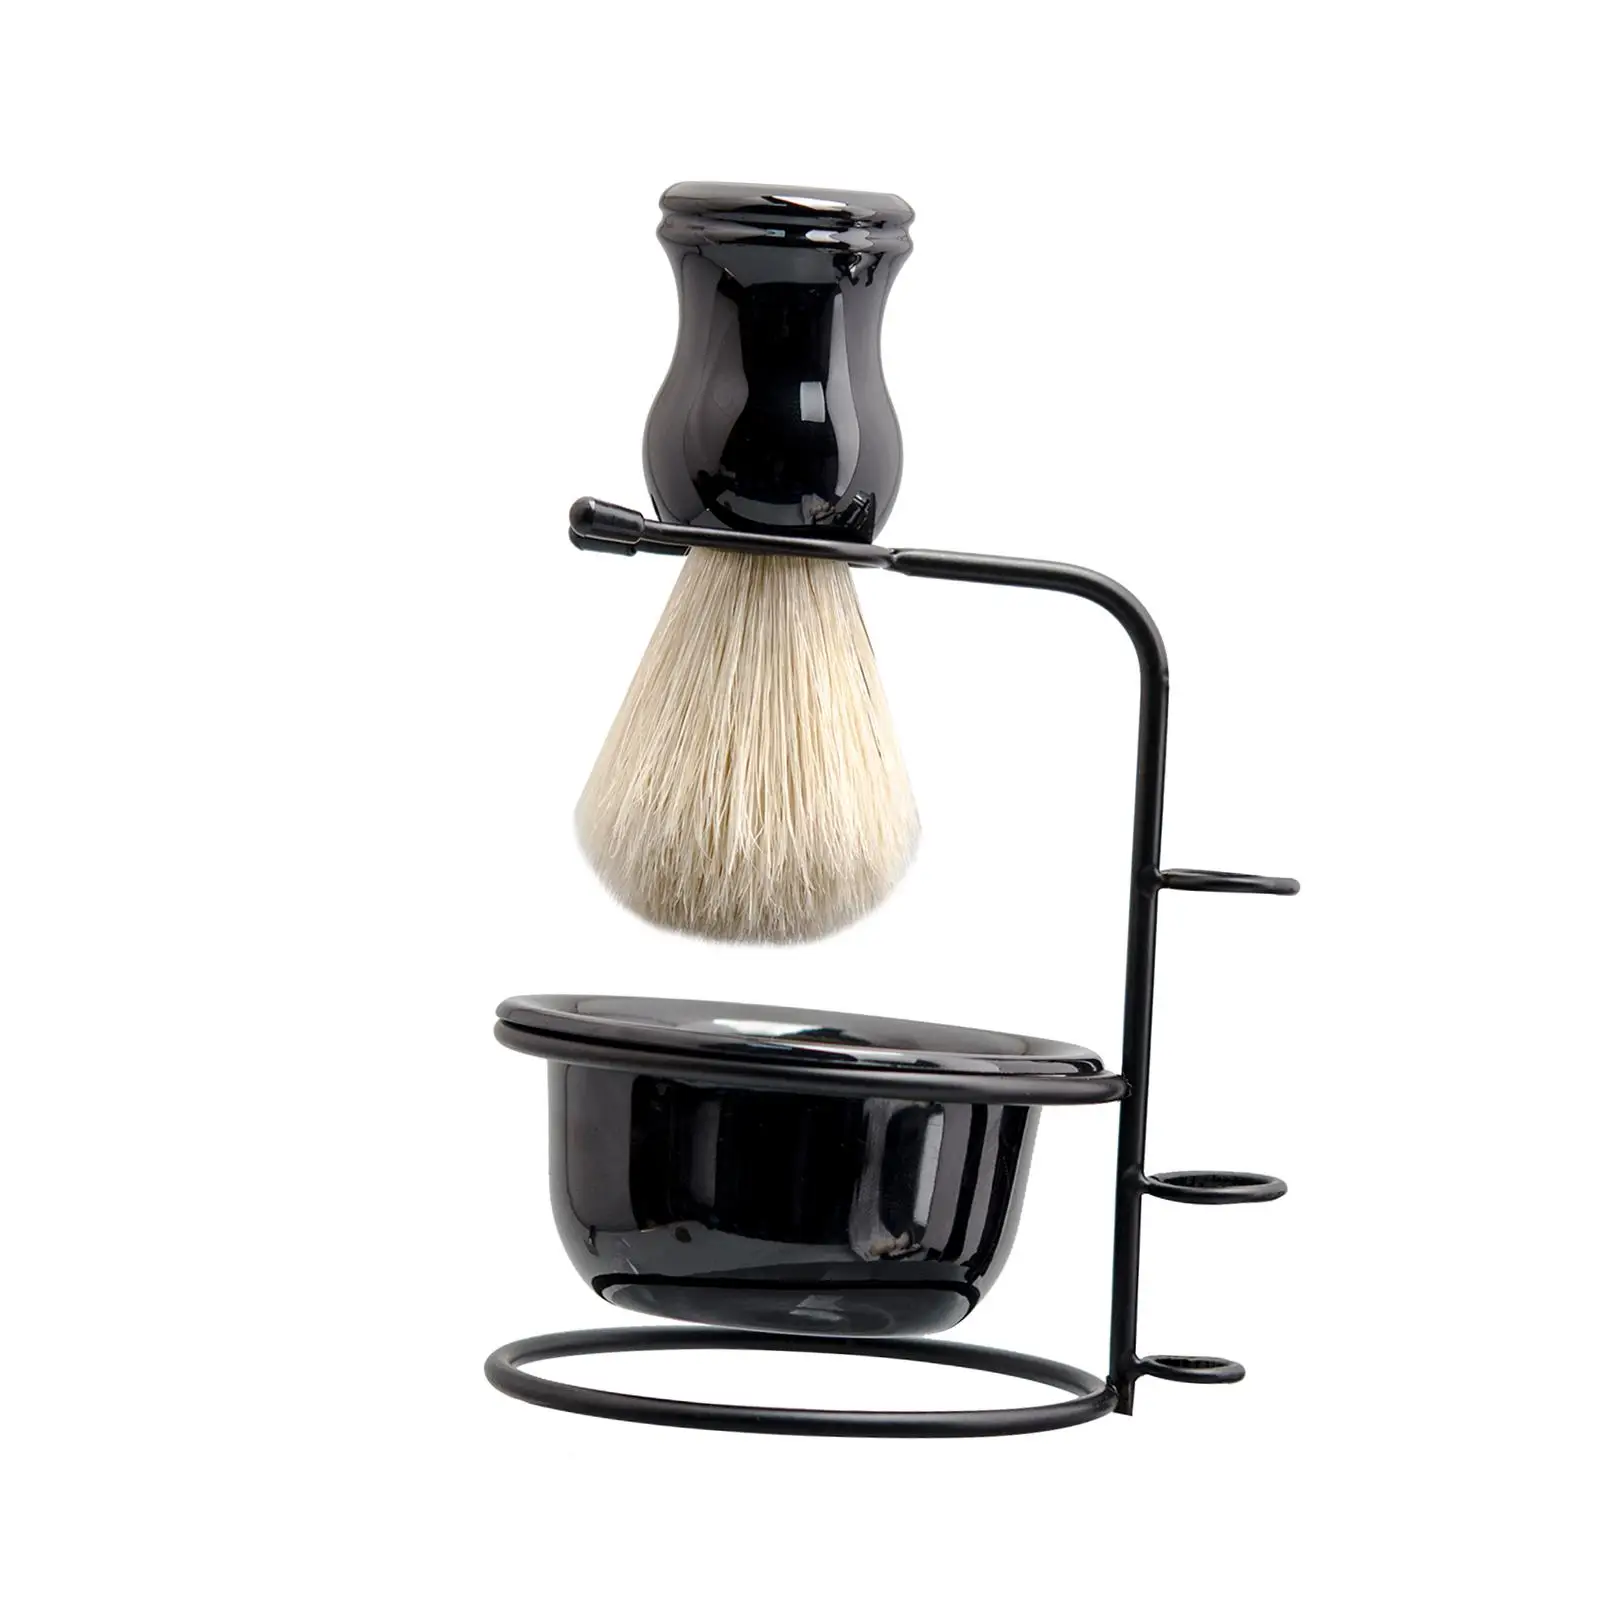 4 in 1 Shaving Set Premium Sturdy Shaving Bowl Razor Razor Shaving Kit Shaving Brush Set Perfect for Every Day Use Shaving Stand